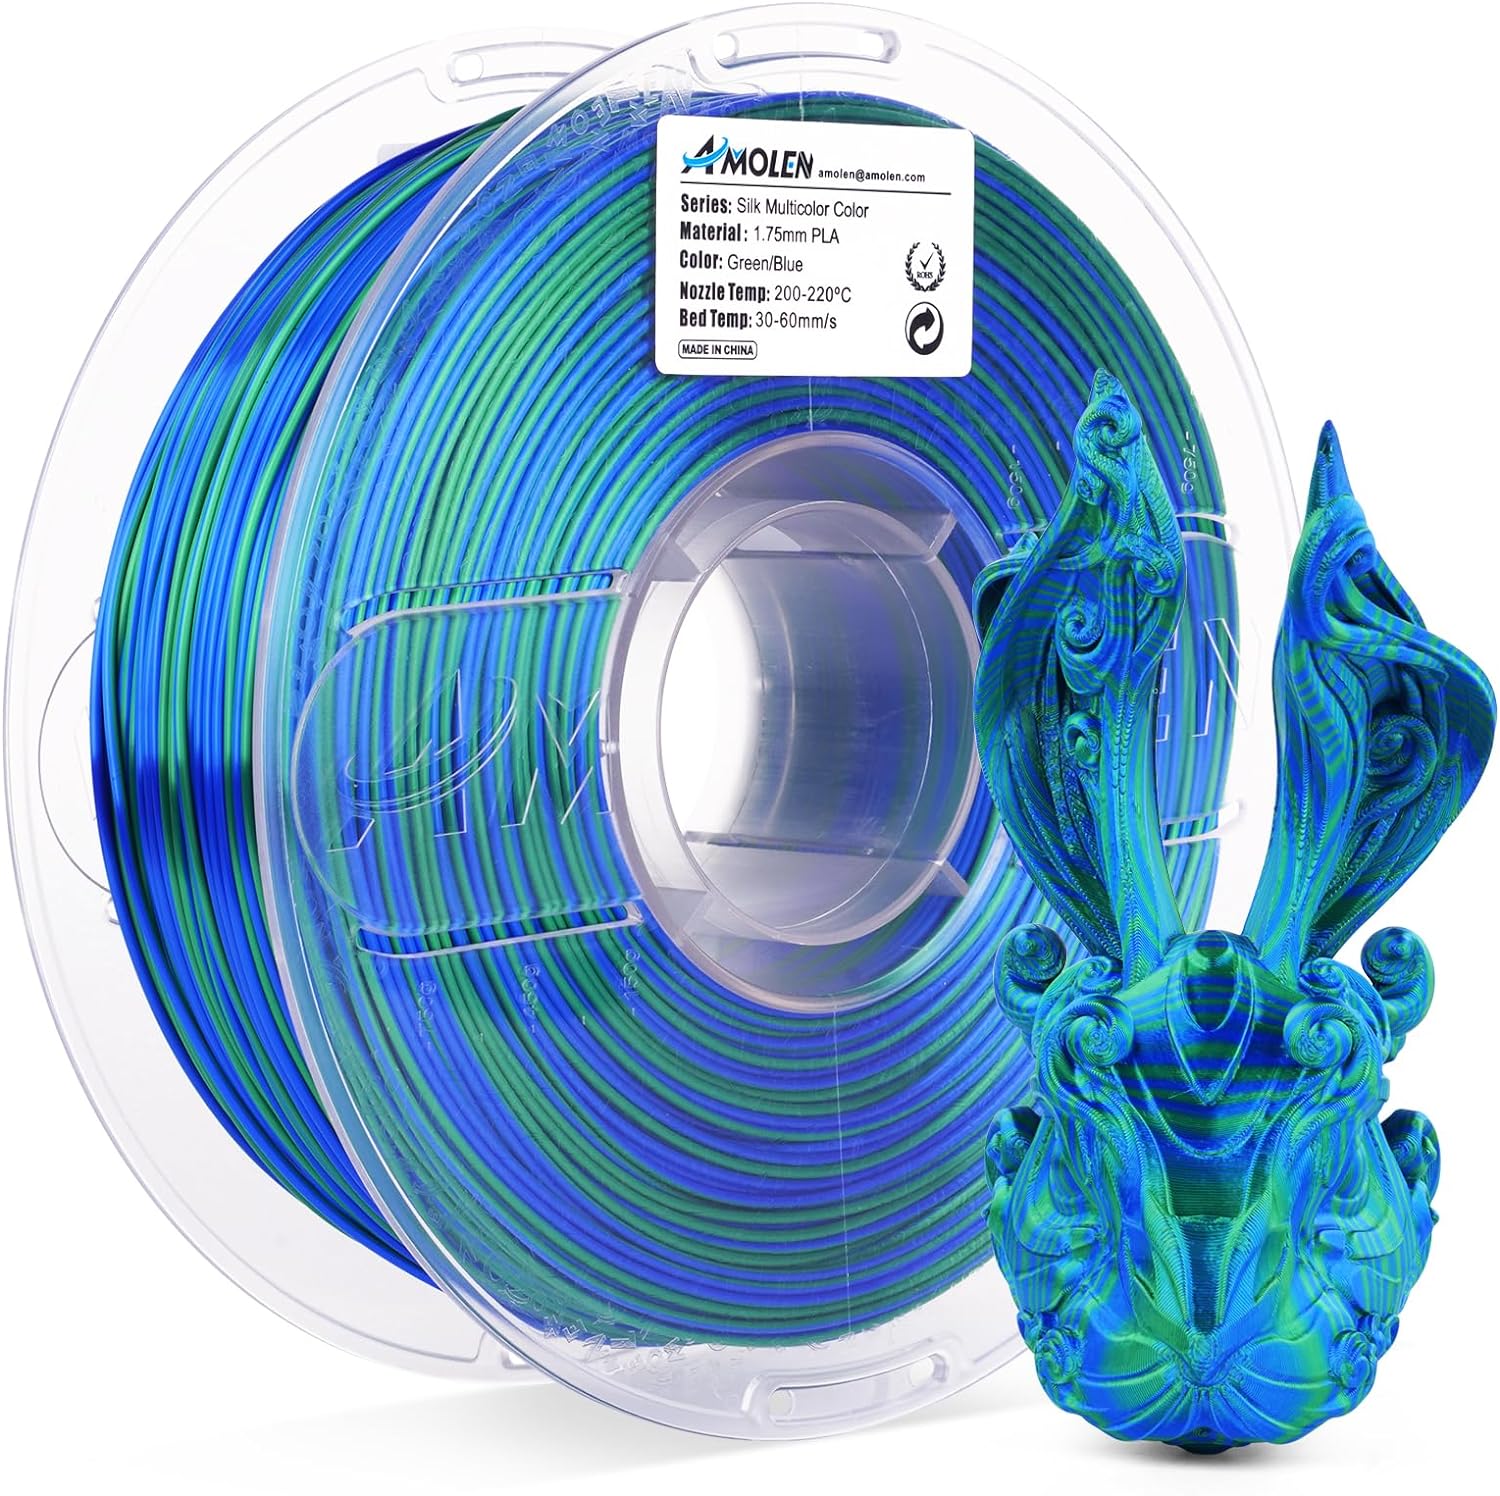 AMOLEN 3D Printer Filaments丨Enjoy a perfect printing experience.